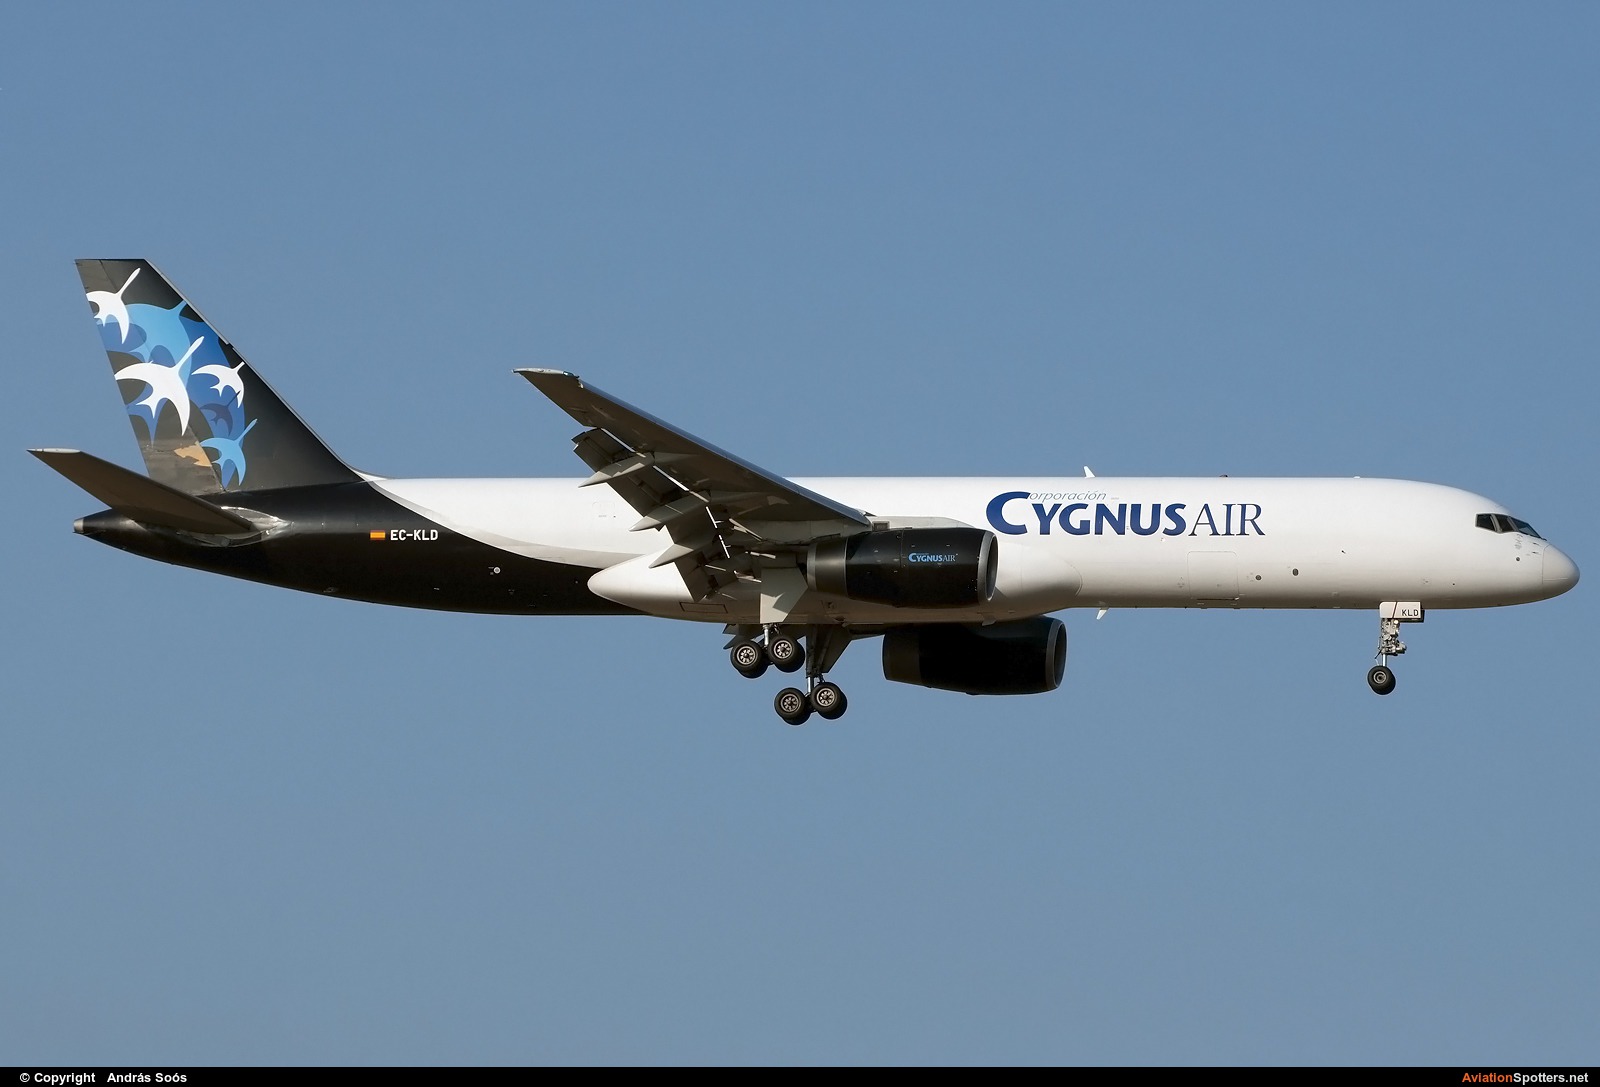 Cygnus Air  -  757-200F  (EC-KLD) By András Soós (sas1965)